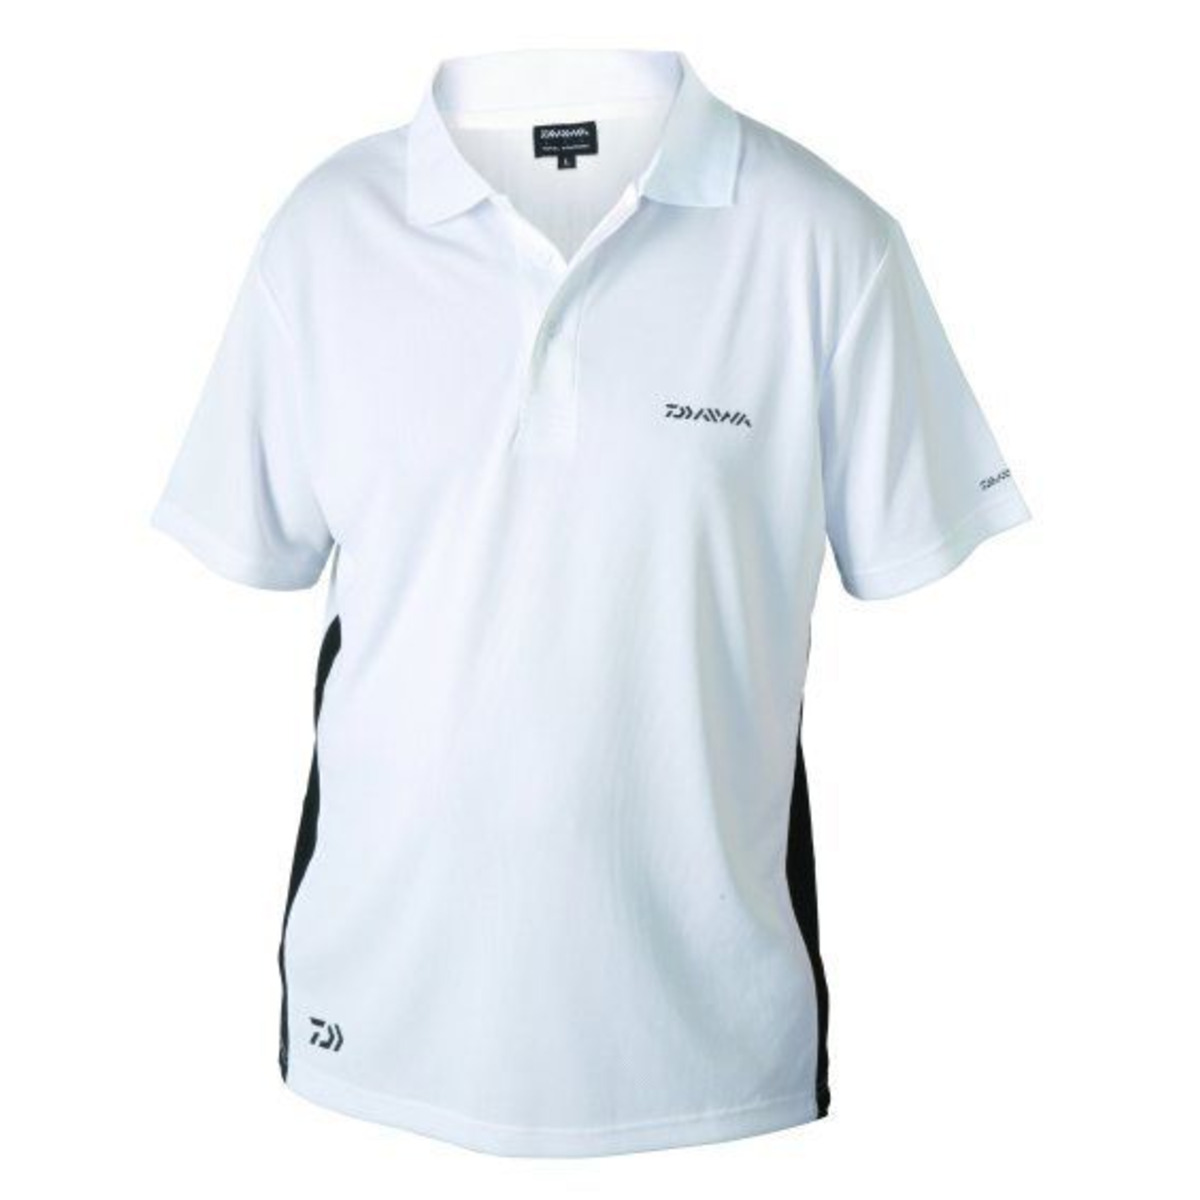 Daiwa Polo Shirt - XL -  White         